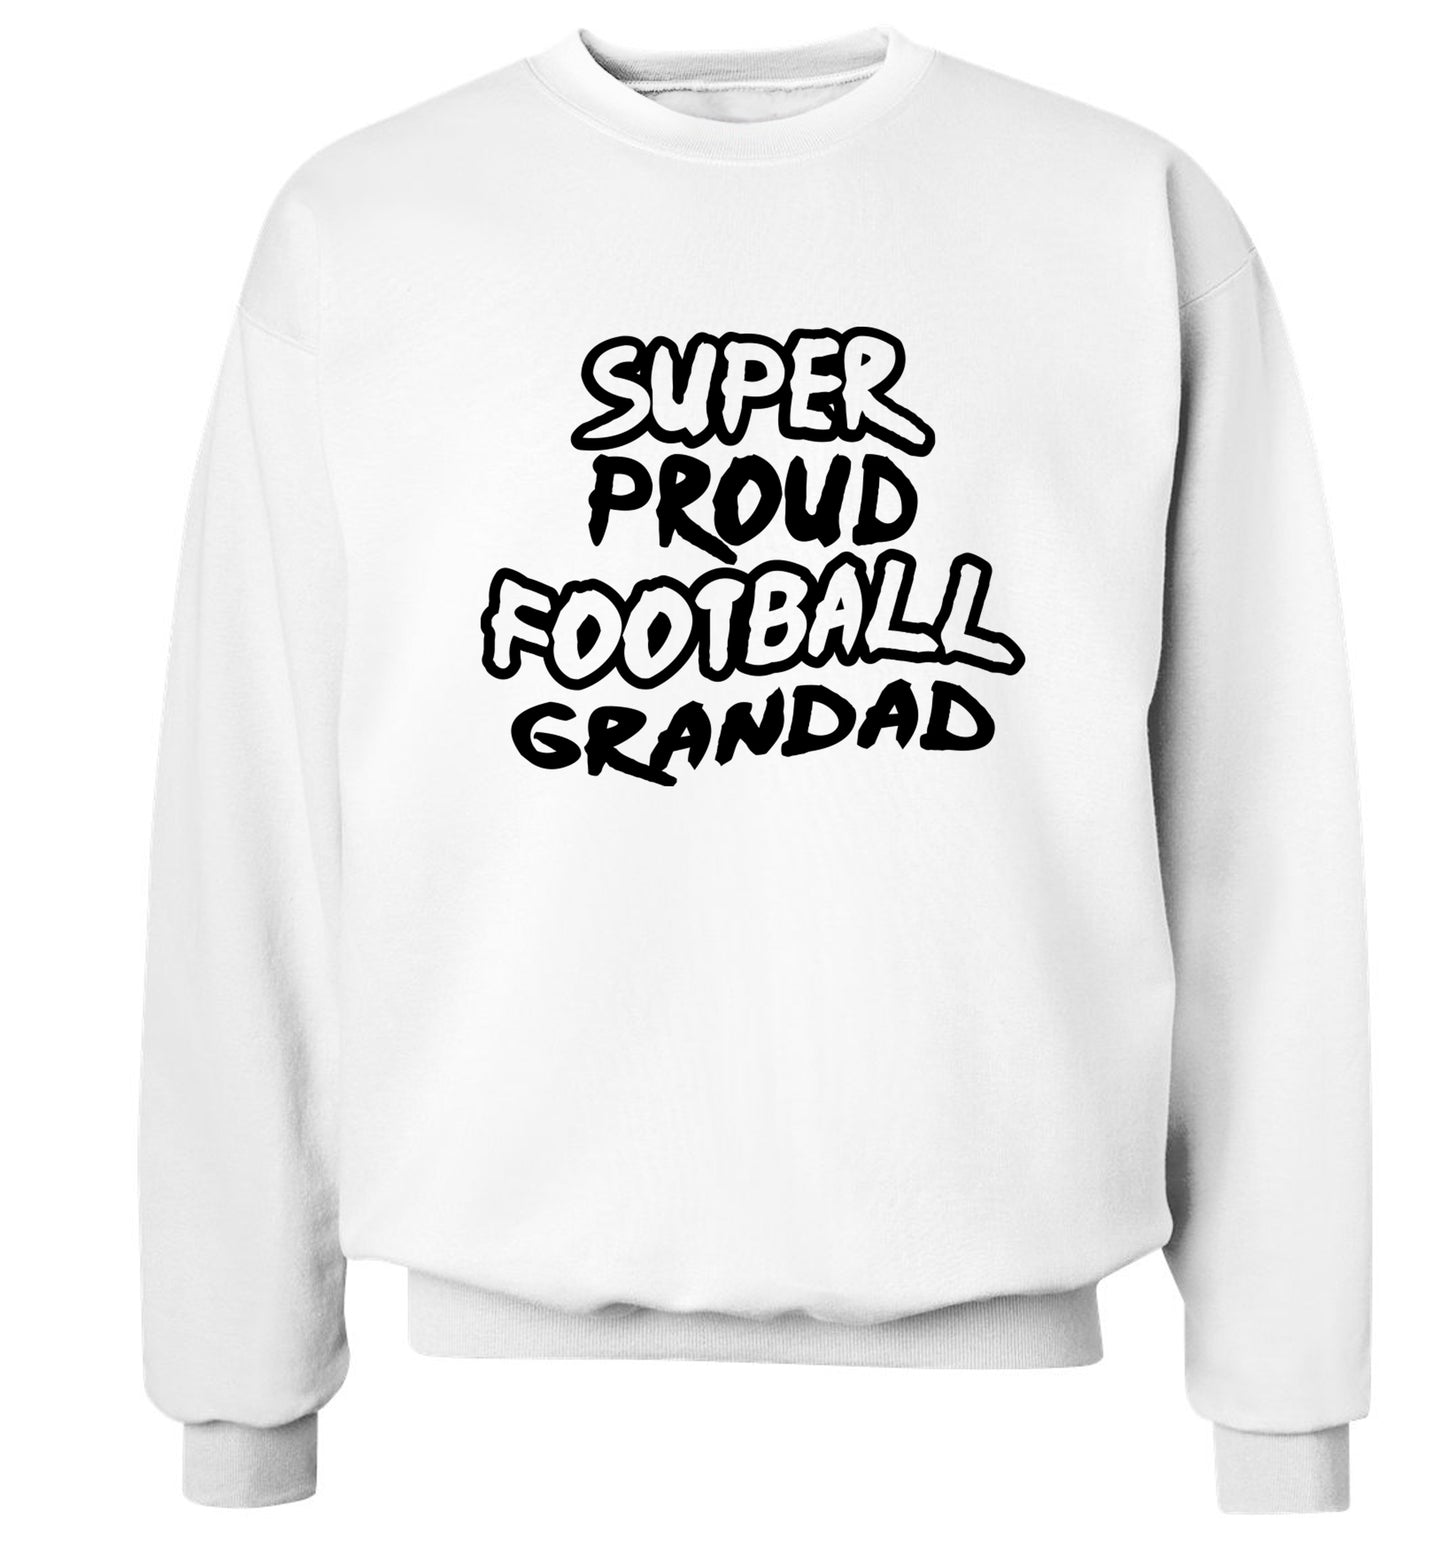 Super proud football grandad Adult's unisexwhite Sweater 2XL